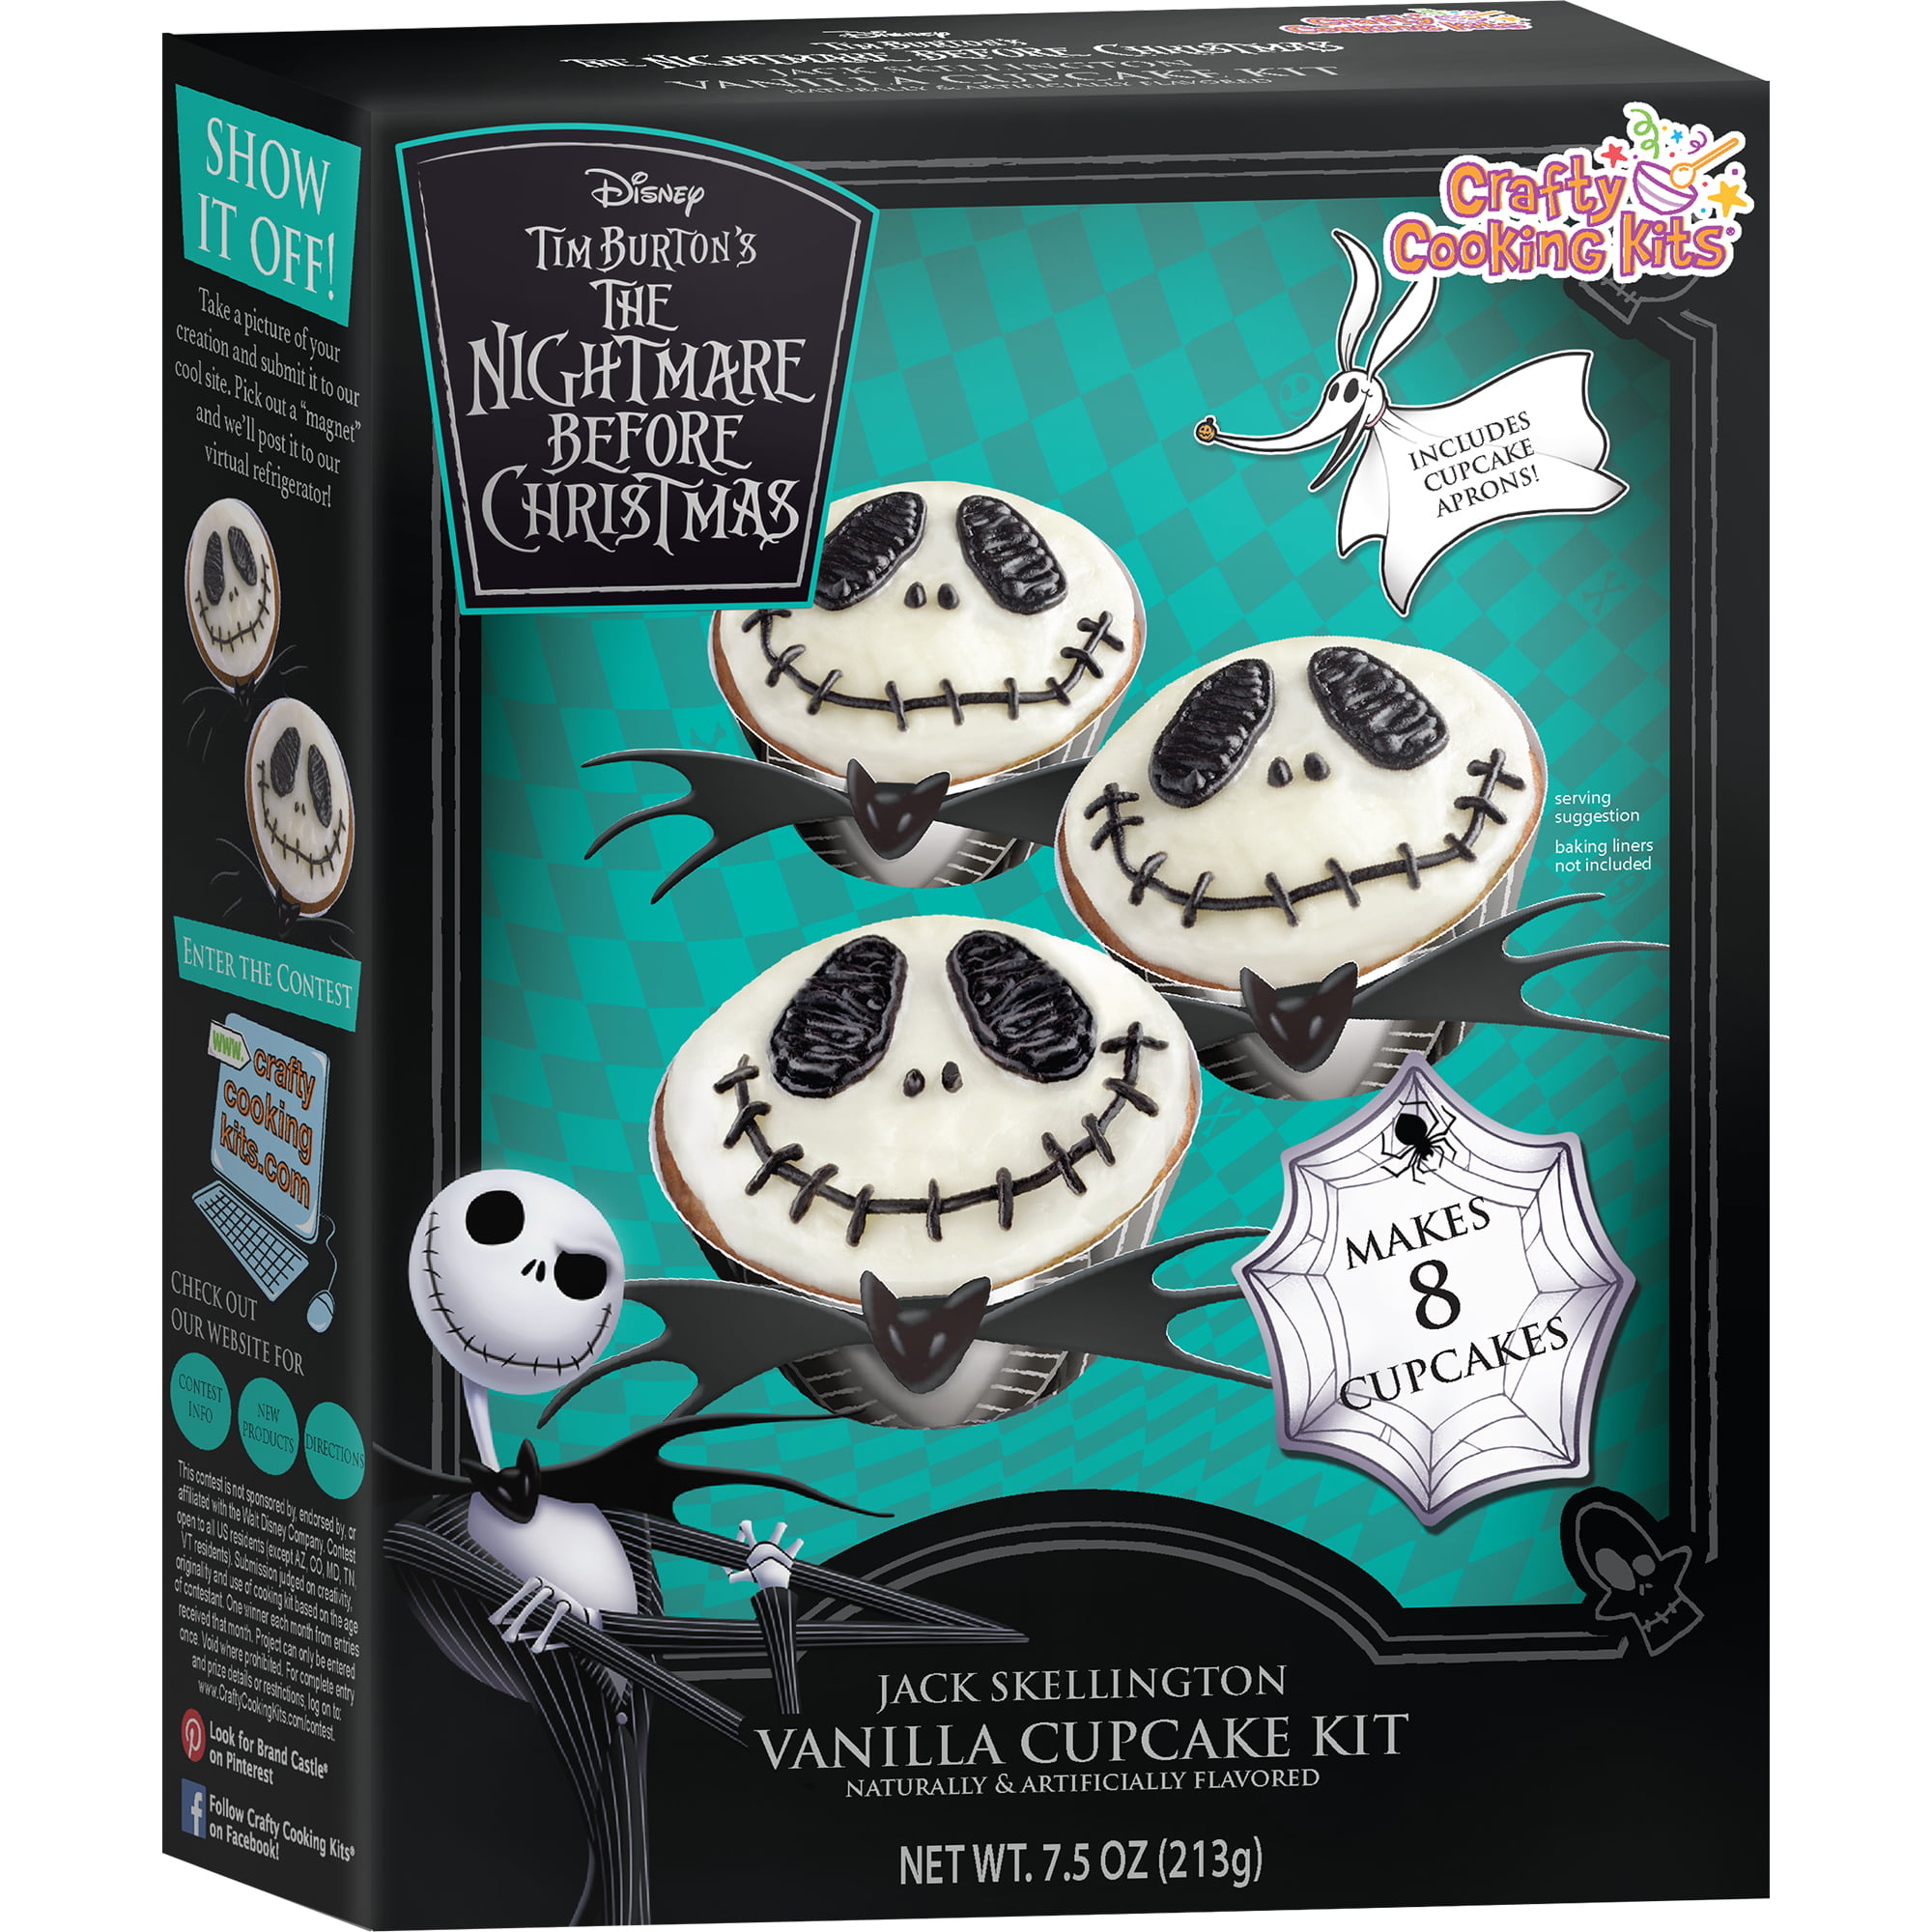 Disney's Jack Skellington Vanilla Cupcake Kit $0.89 FS with WM+ at Walmart $0.87